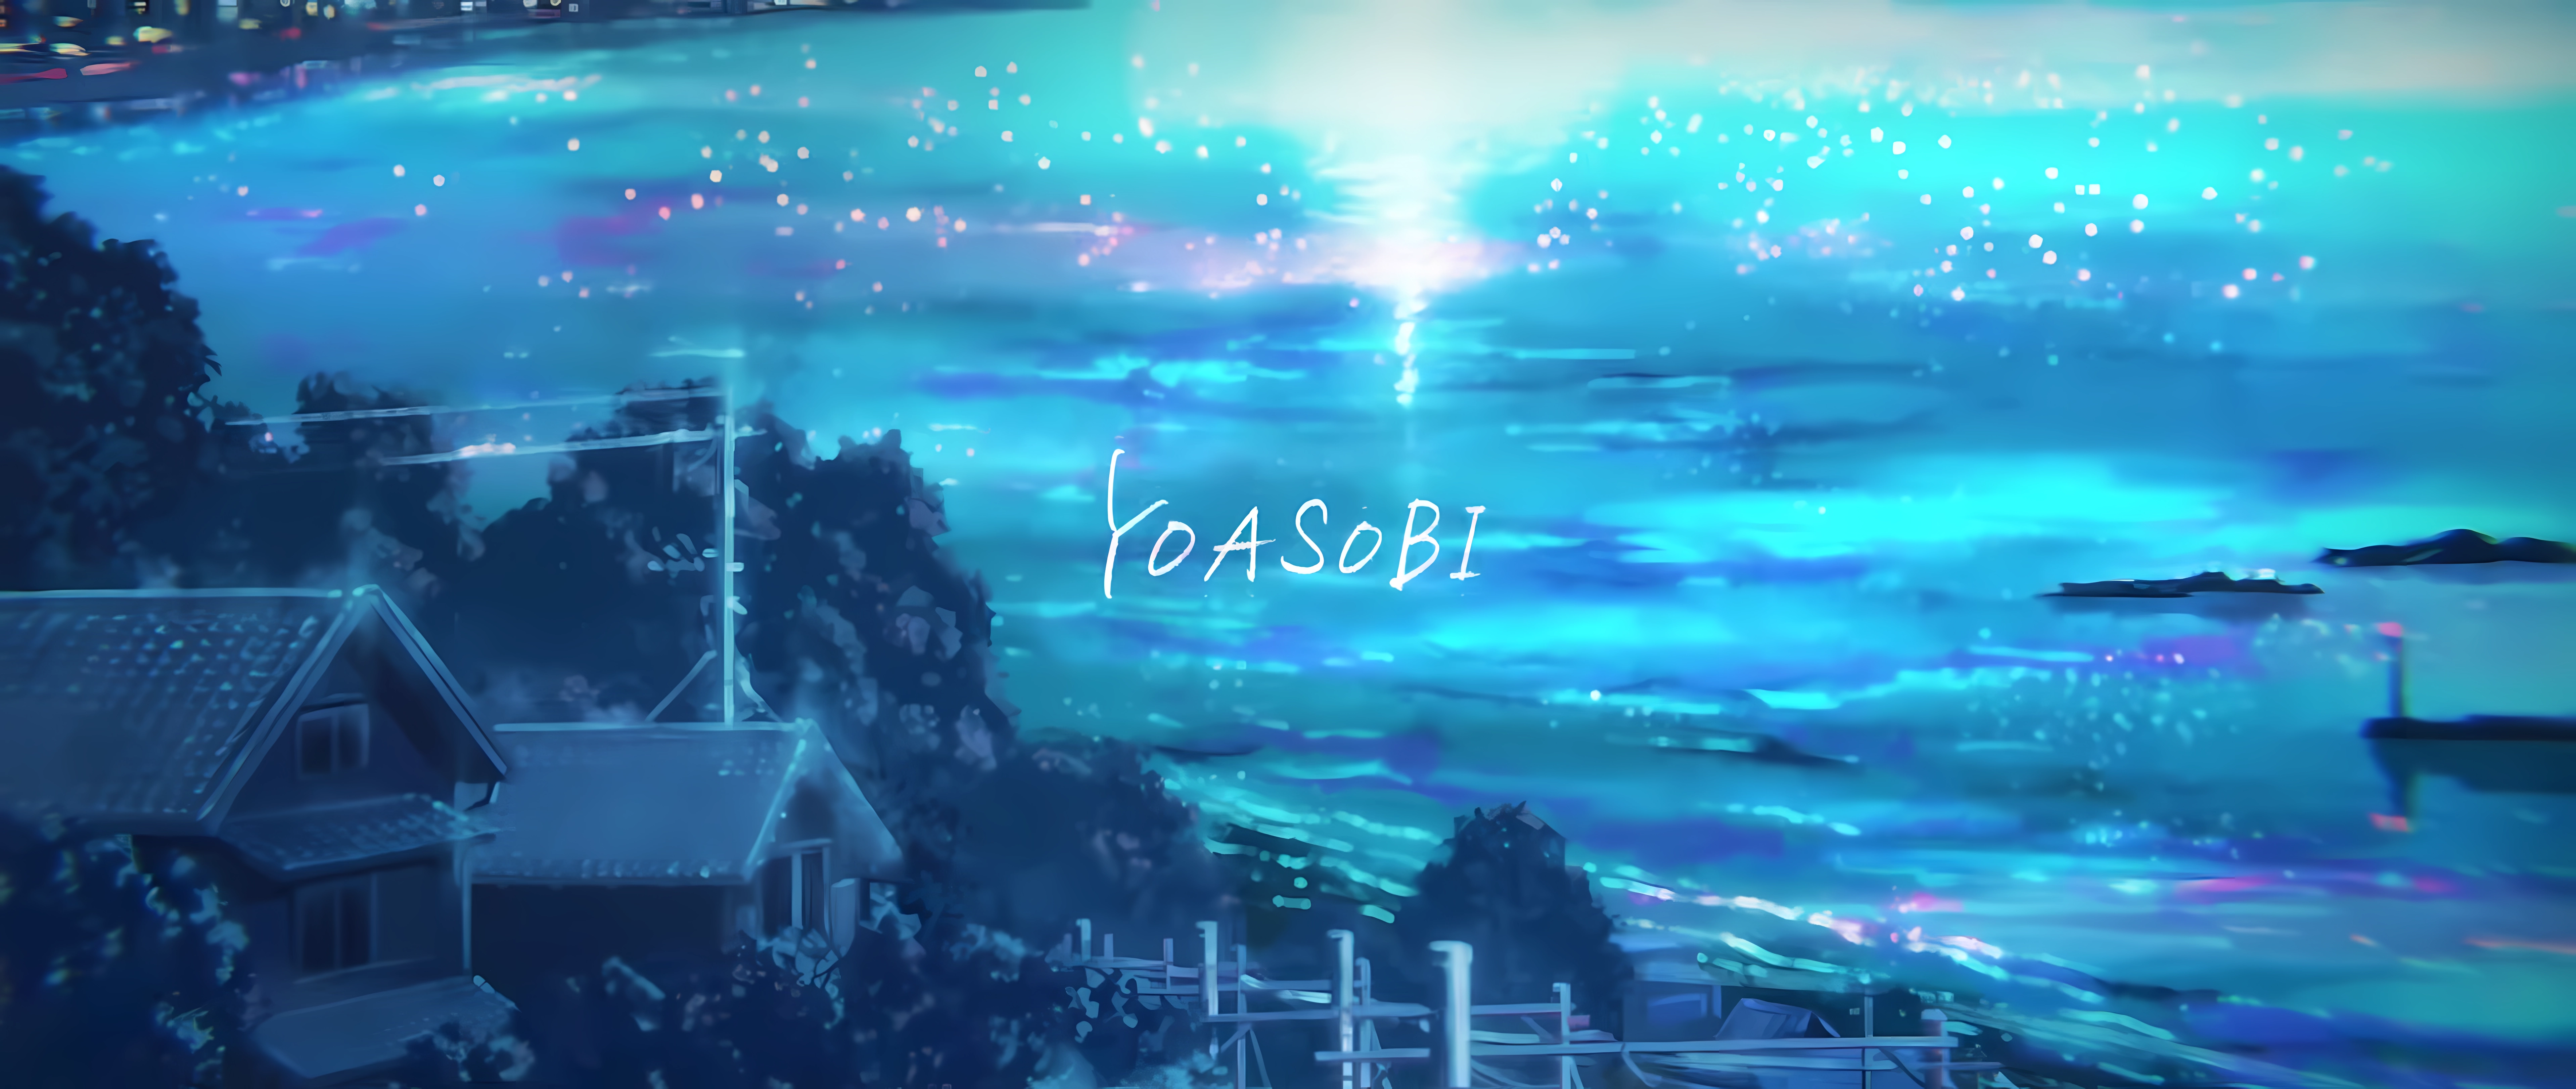 YOASOBi Anime Girls Anime Screenshot Water 7672x3244